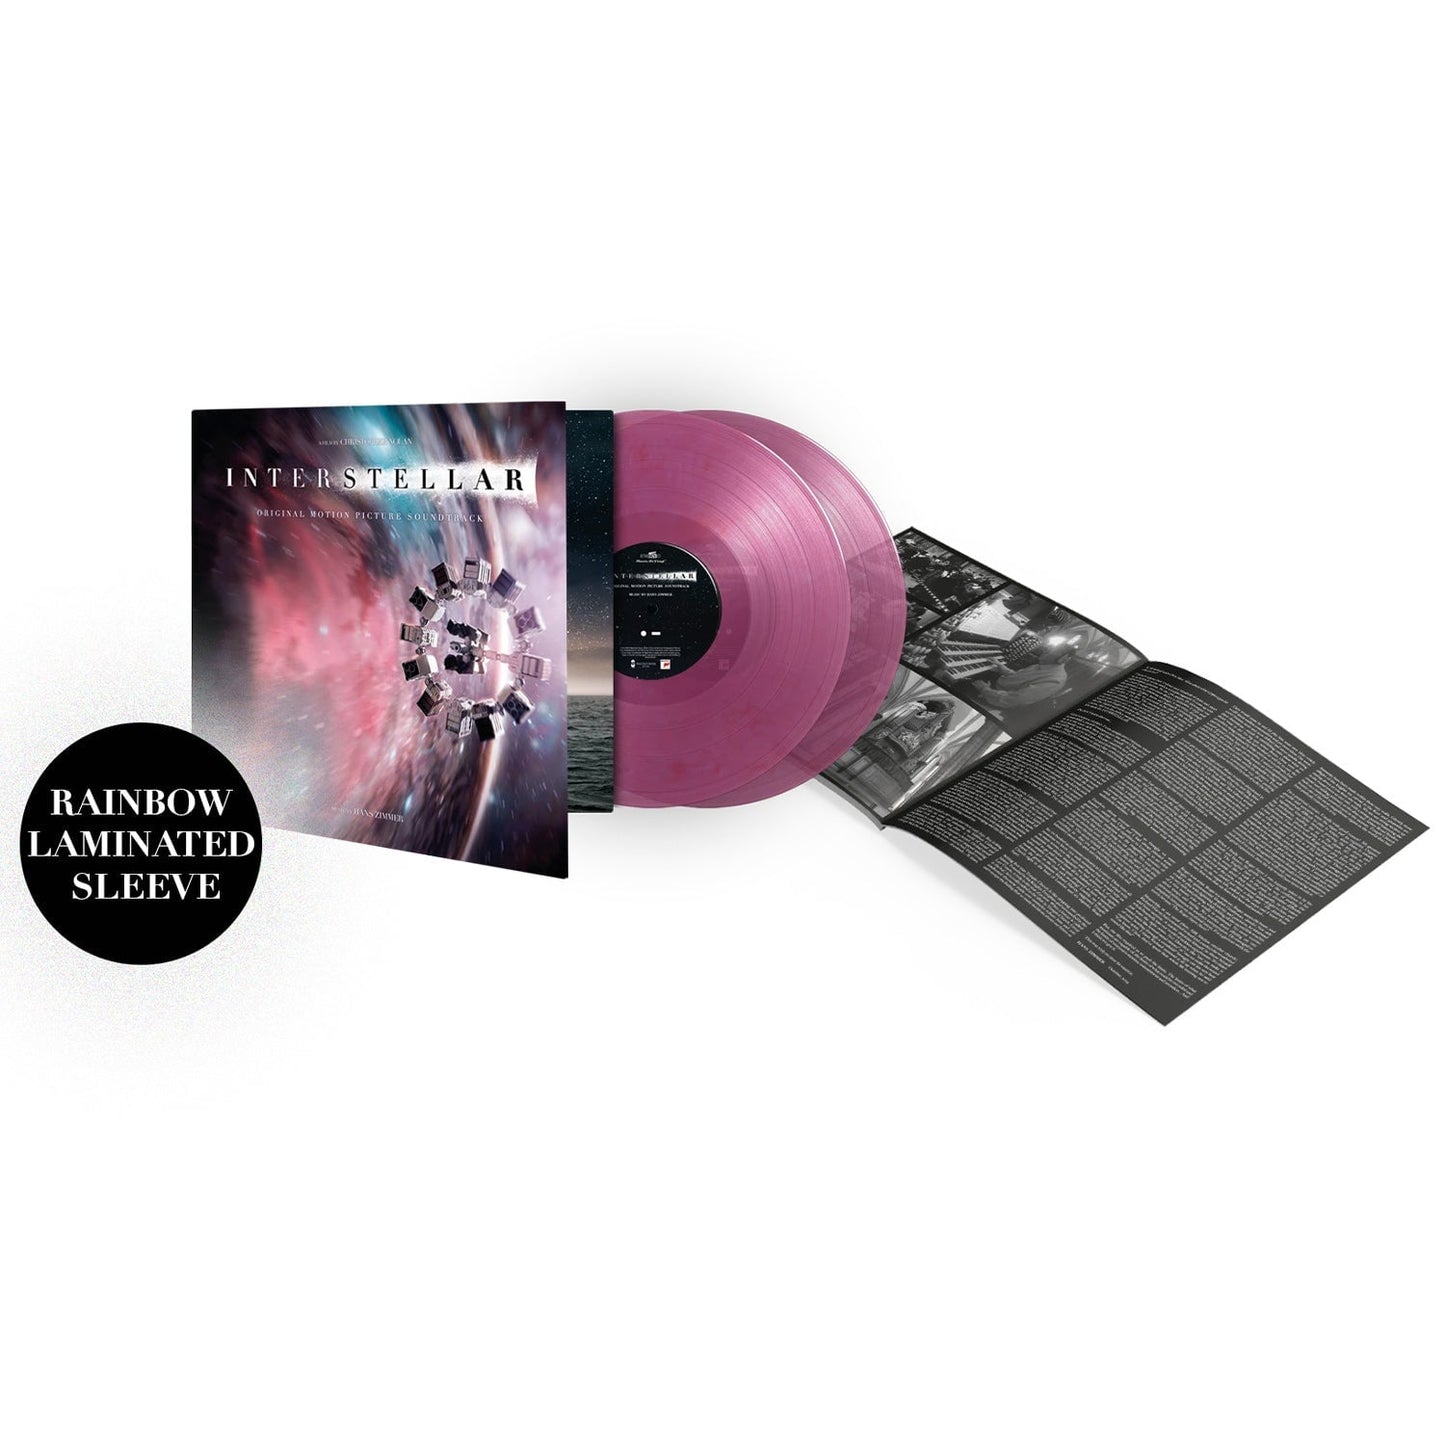 Interstellar (Original Motion Picture Soundtrack) (Limited Translucent Purple Vinyl 2 LP)